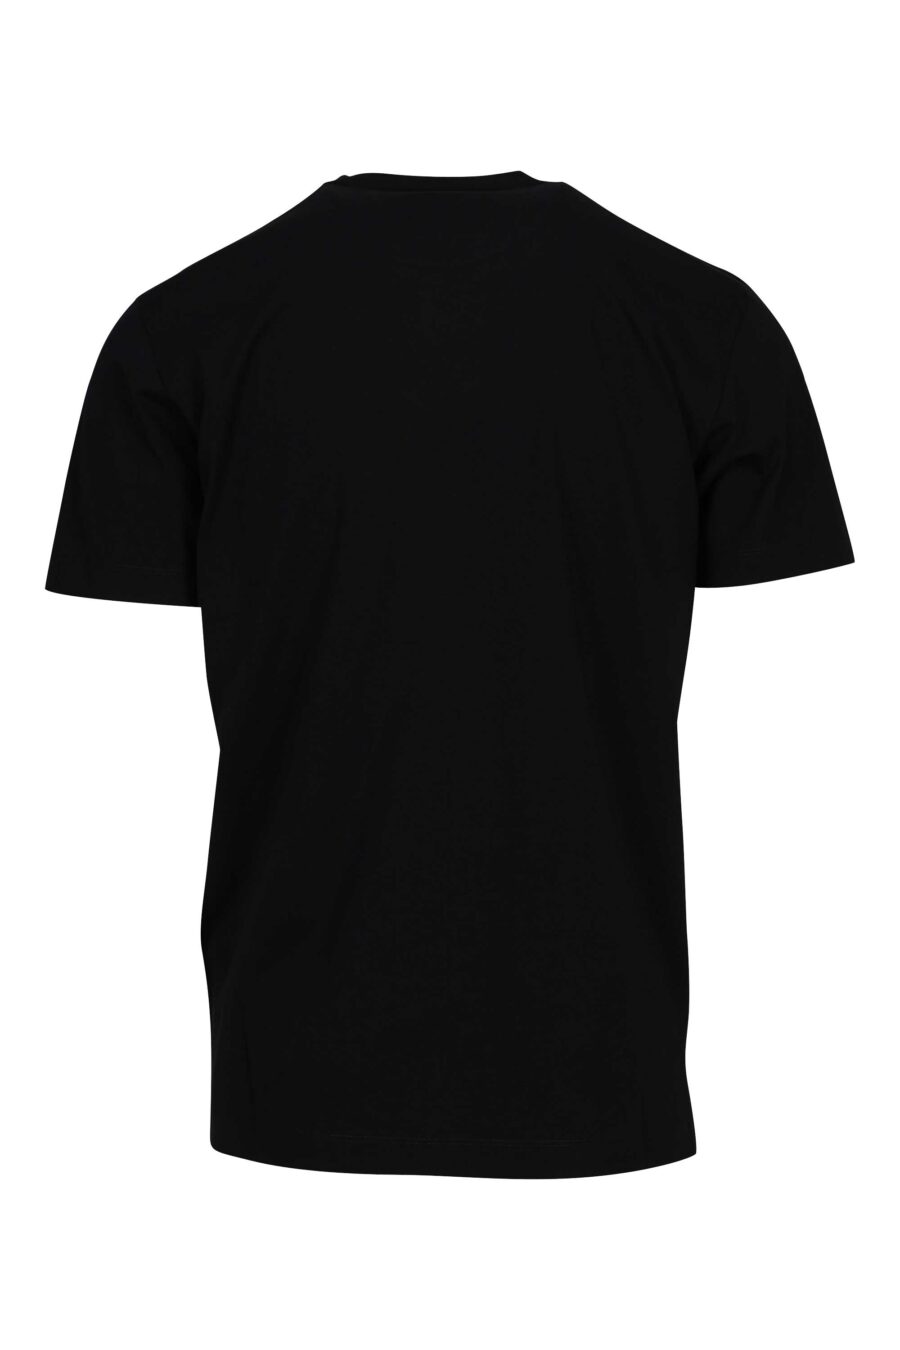 Camiseta negra con maxilogo "enfants terribles since 1995" - 8054148504212 1